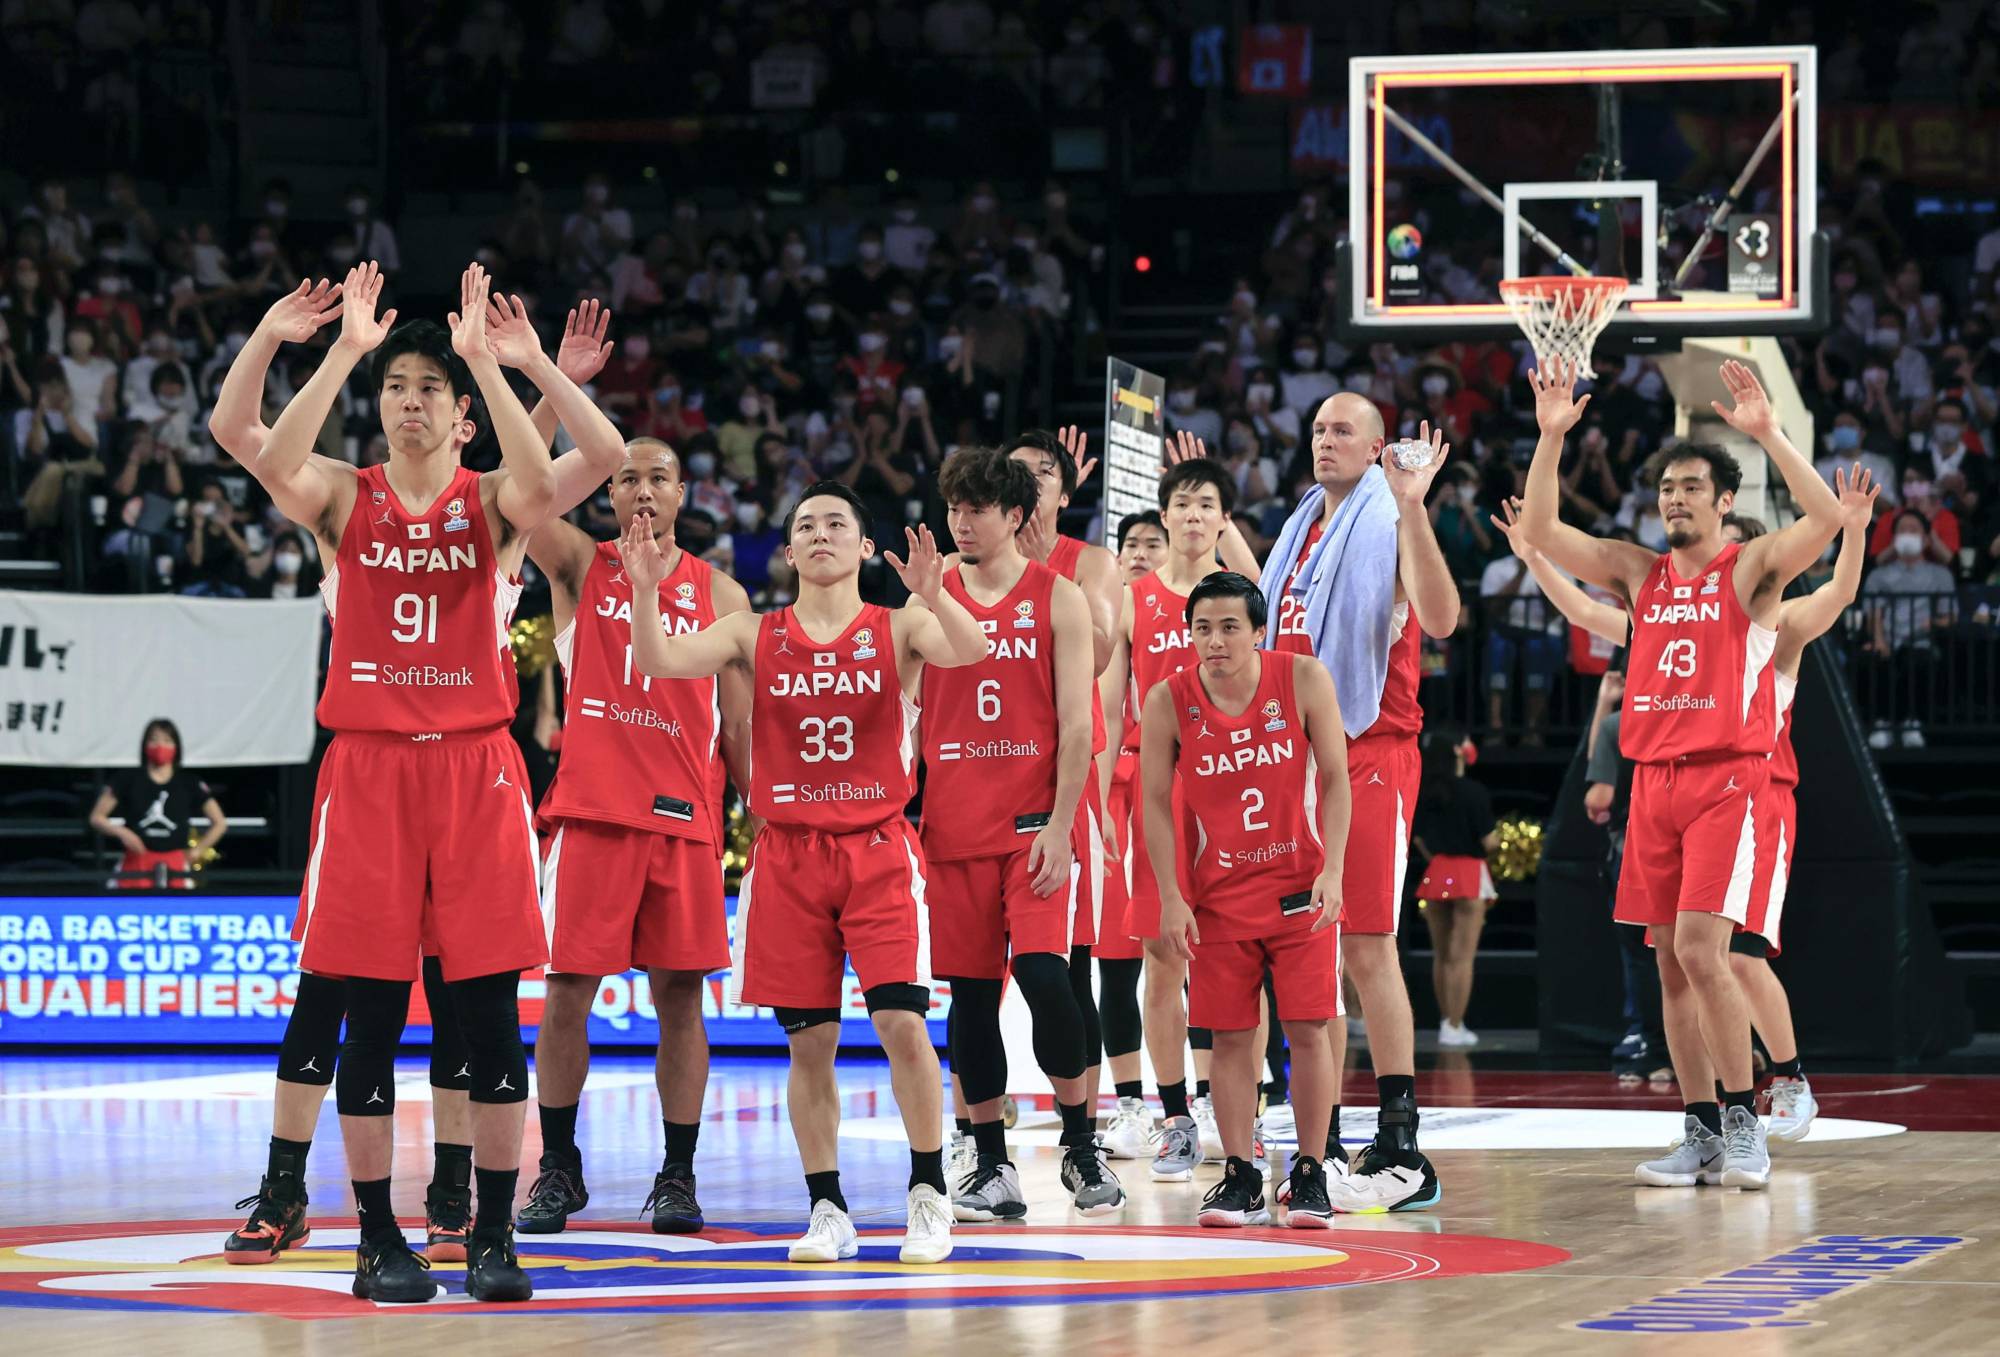 Japan 2023 FIBA World Cup - Alternate Jersey by jpsakuragi